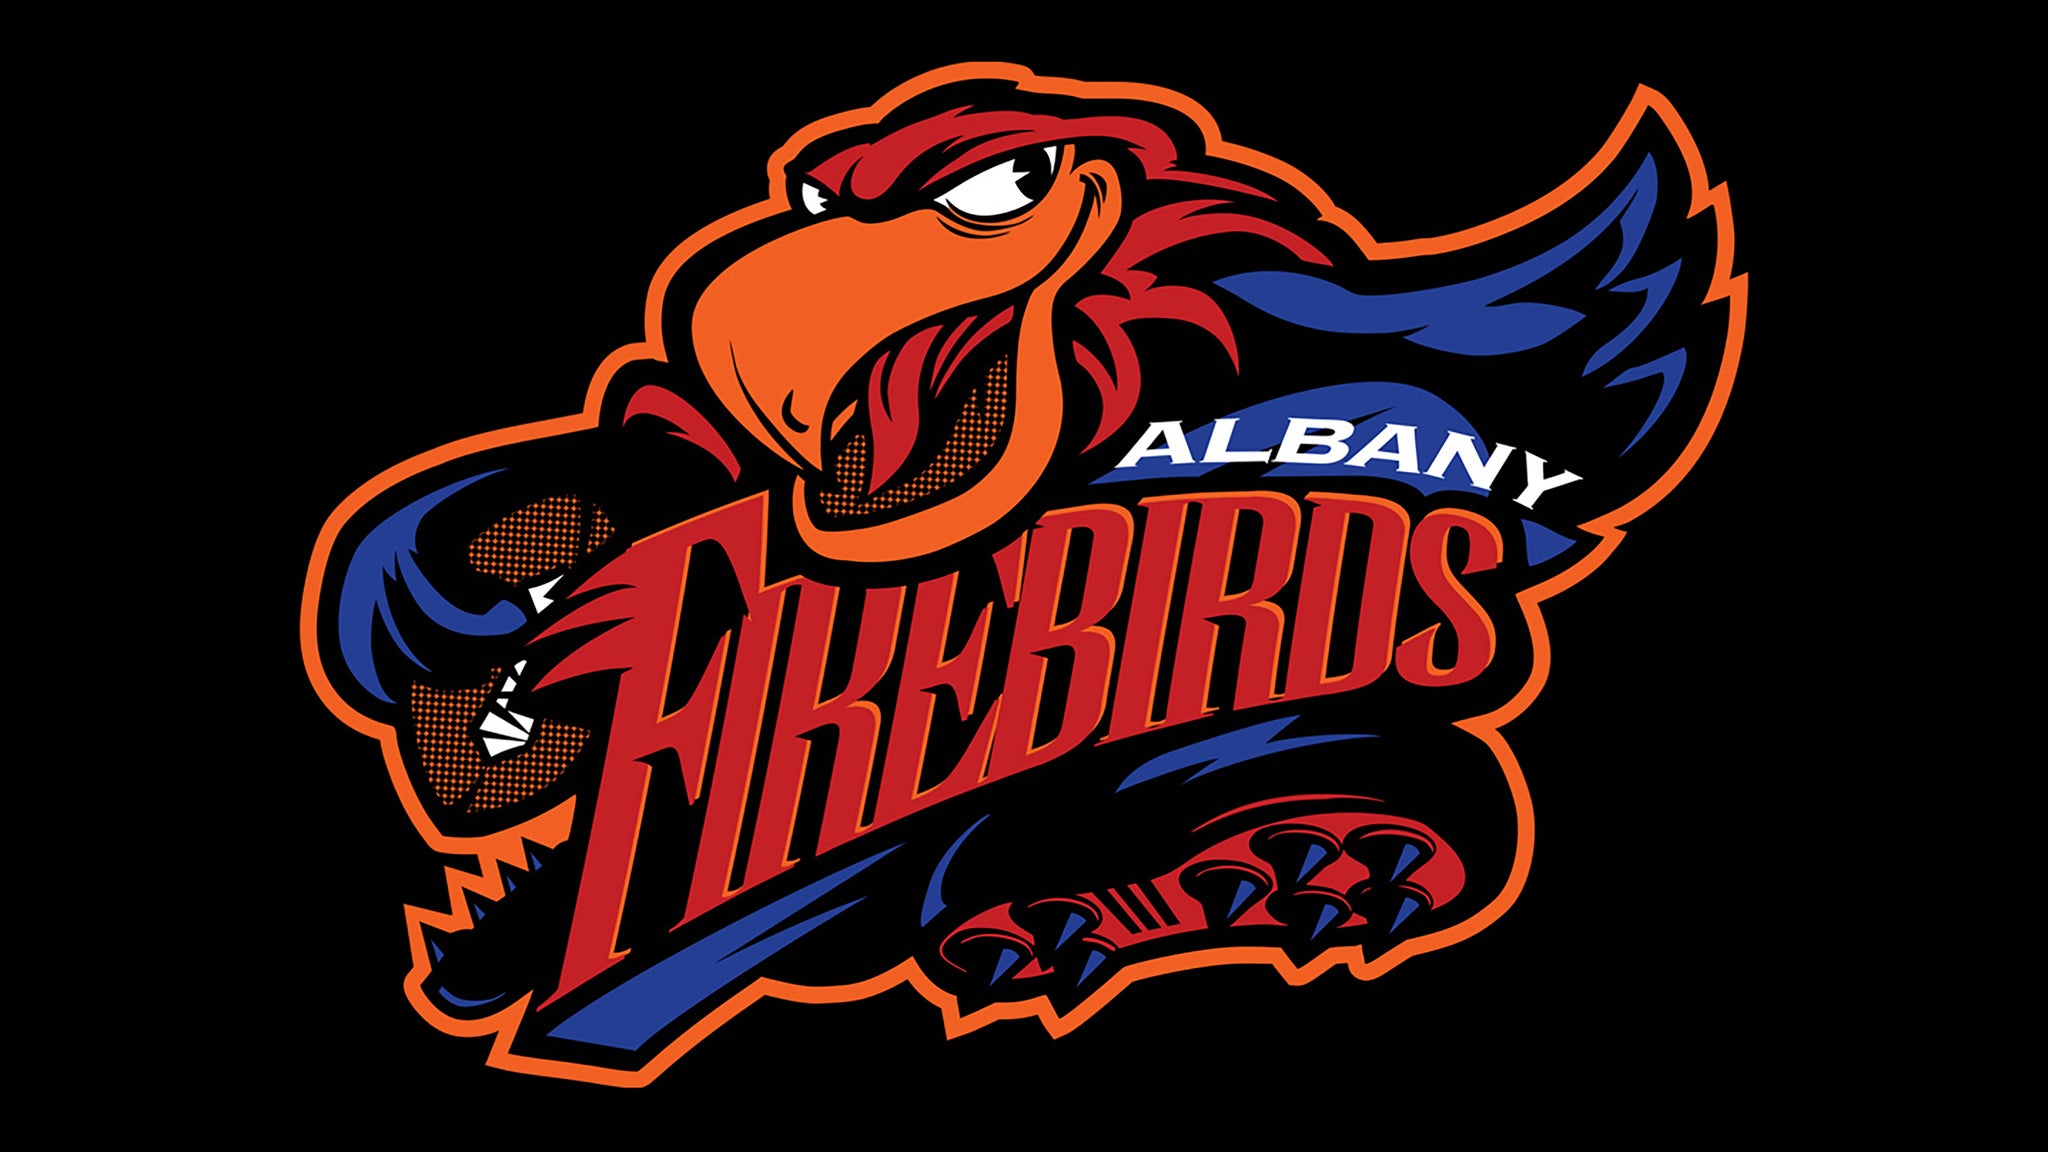 Albany Firebirds Vs Minnesota Myth